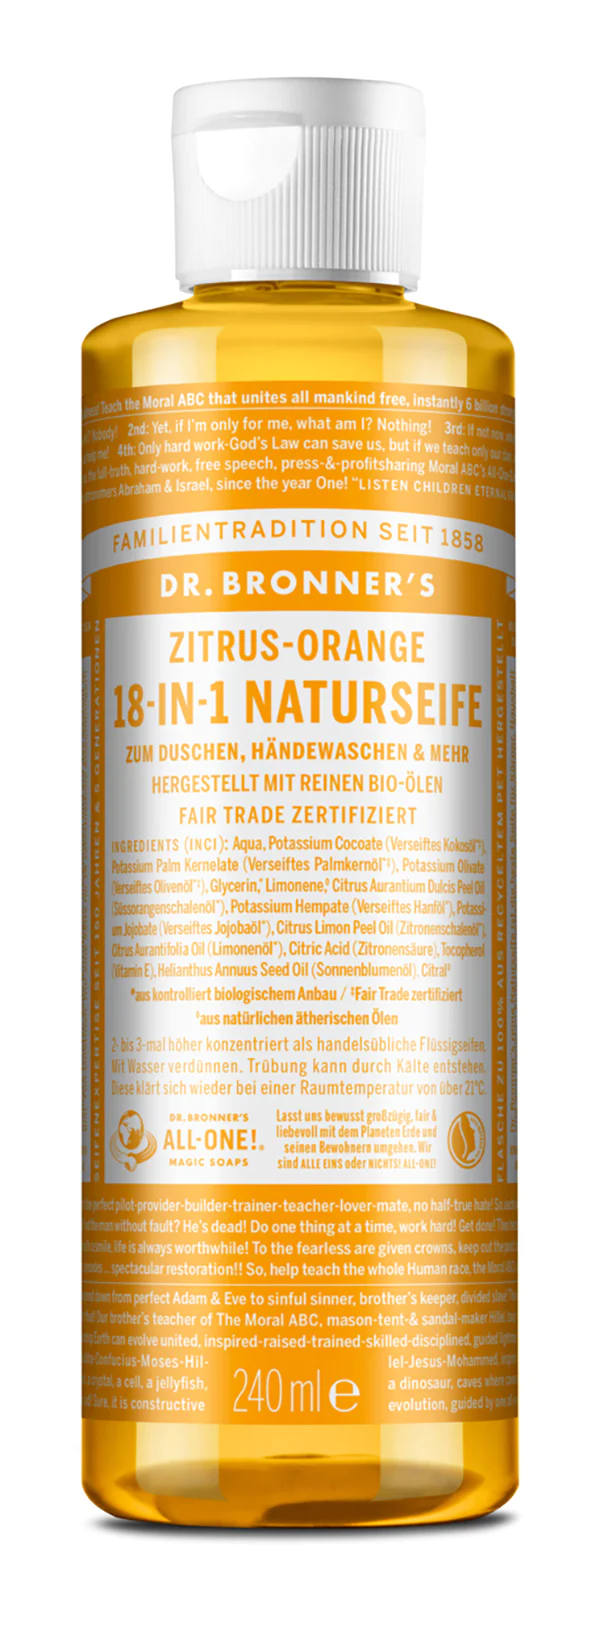 Dr Bronner 18-IN-1 NATURSEIFE Zitrus-Orange 240ml